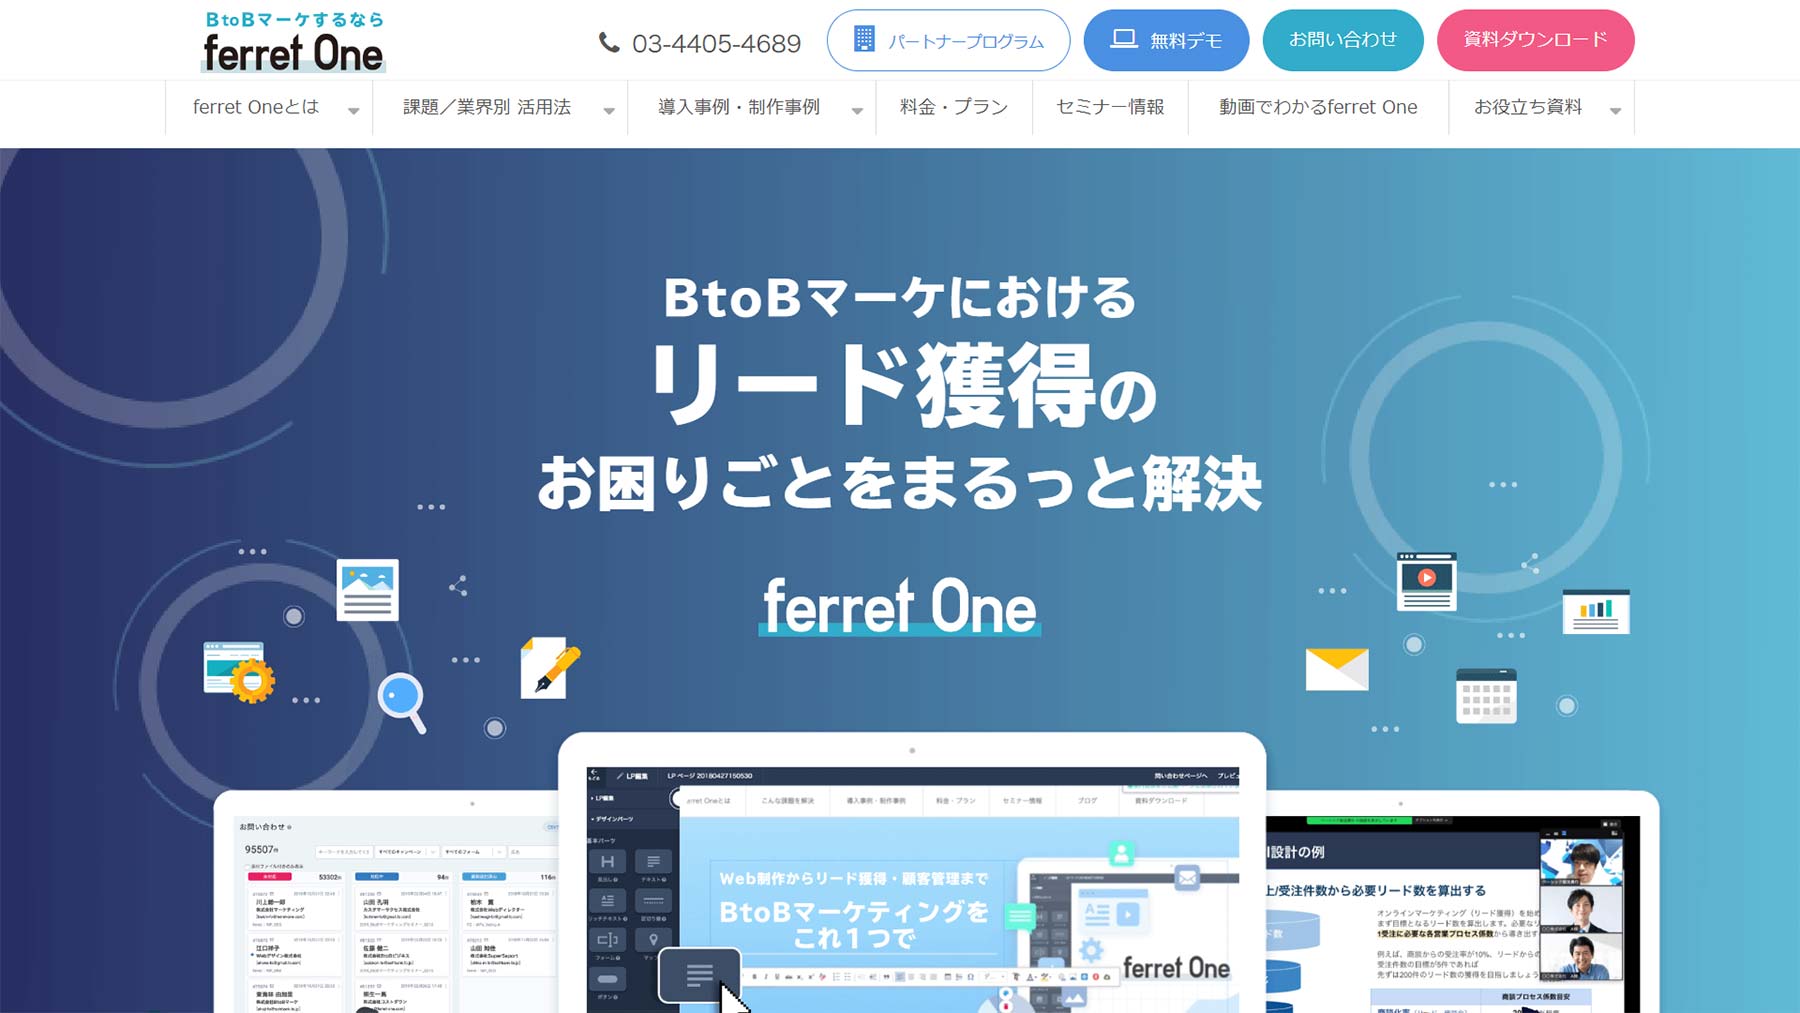 ferret One公式Webサイト